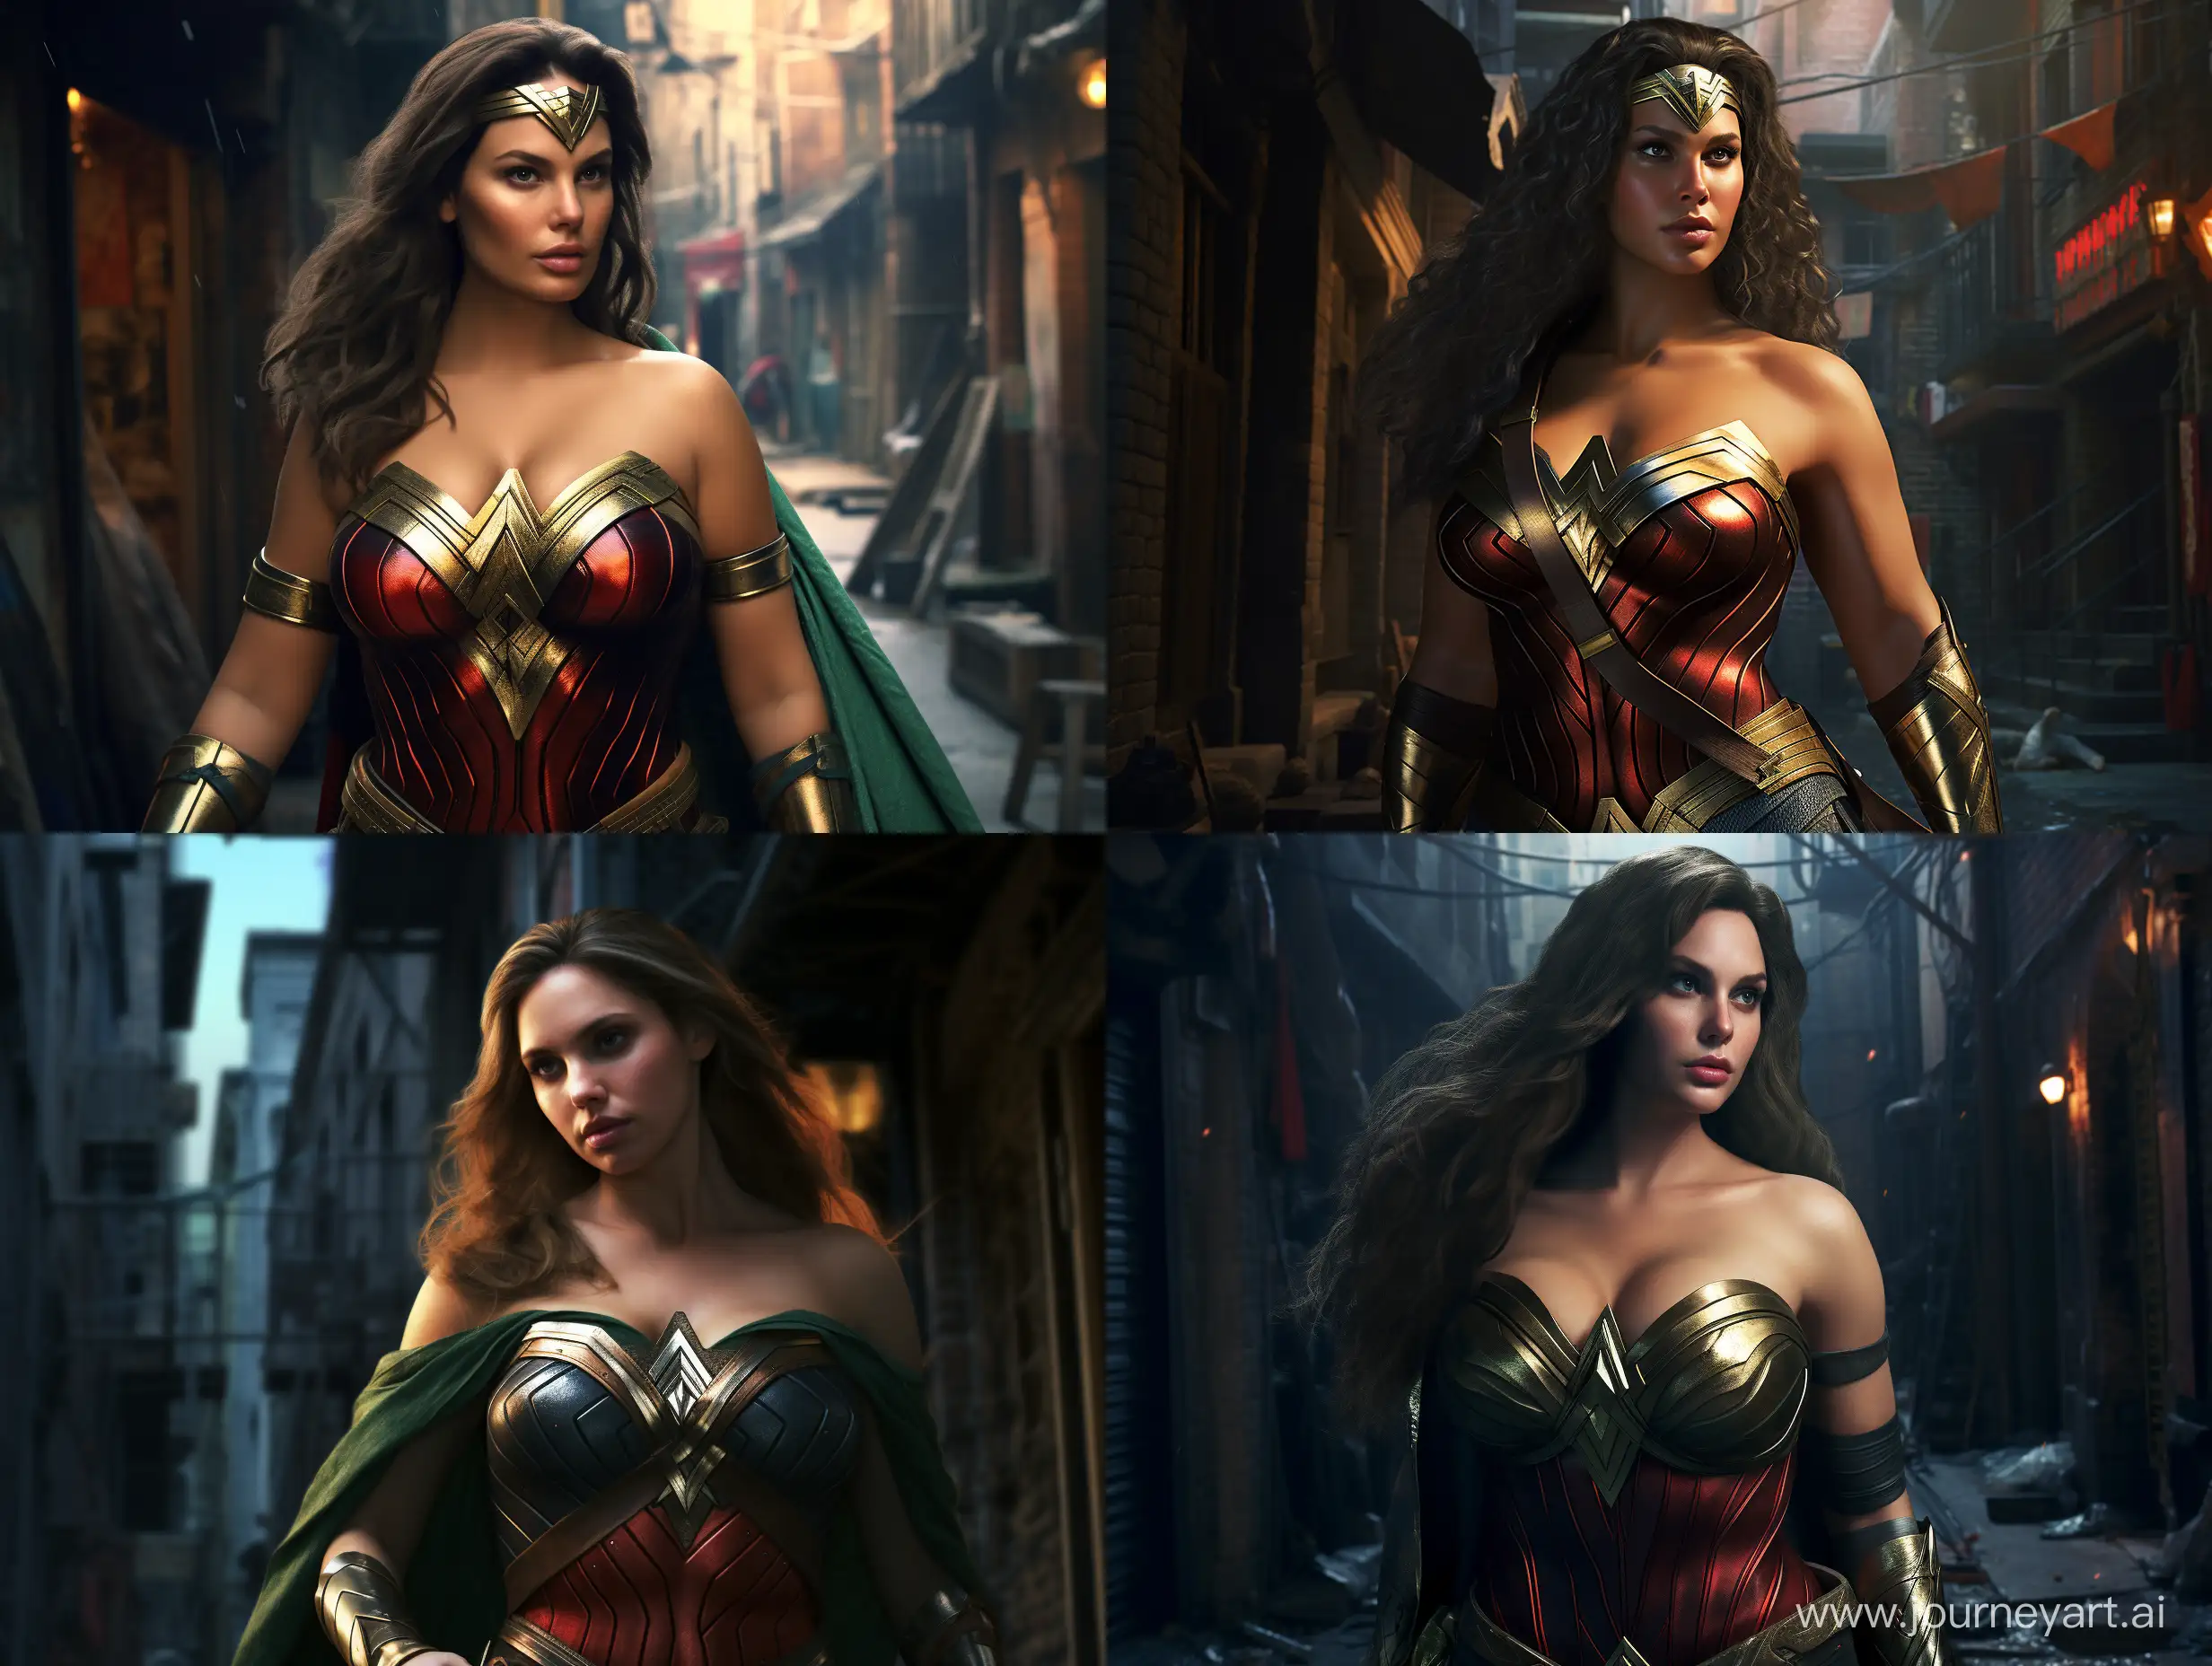 Curvy-Wonder-Woman-Poses-Confidently-in-Cinematic-Alleyway